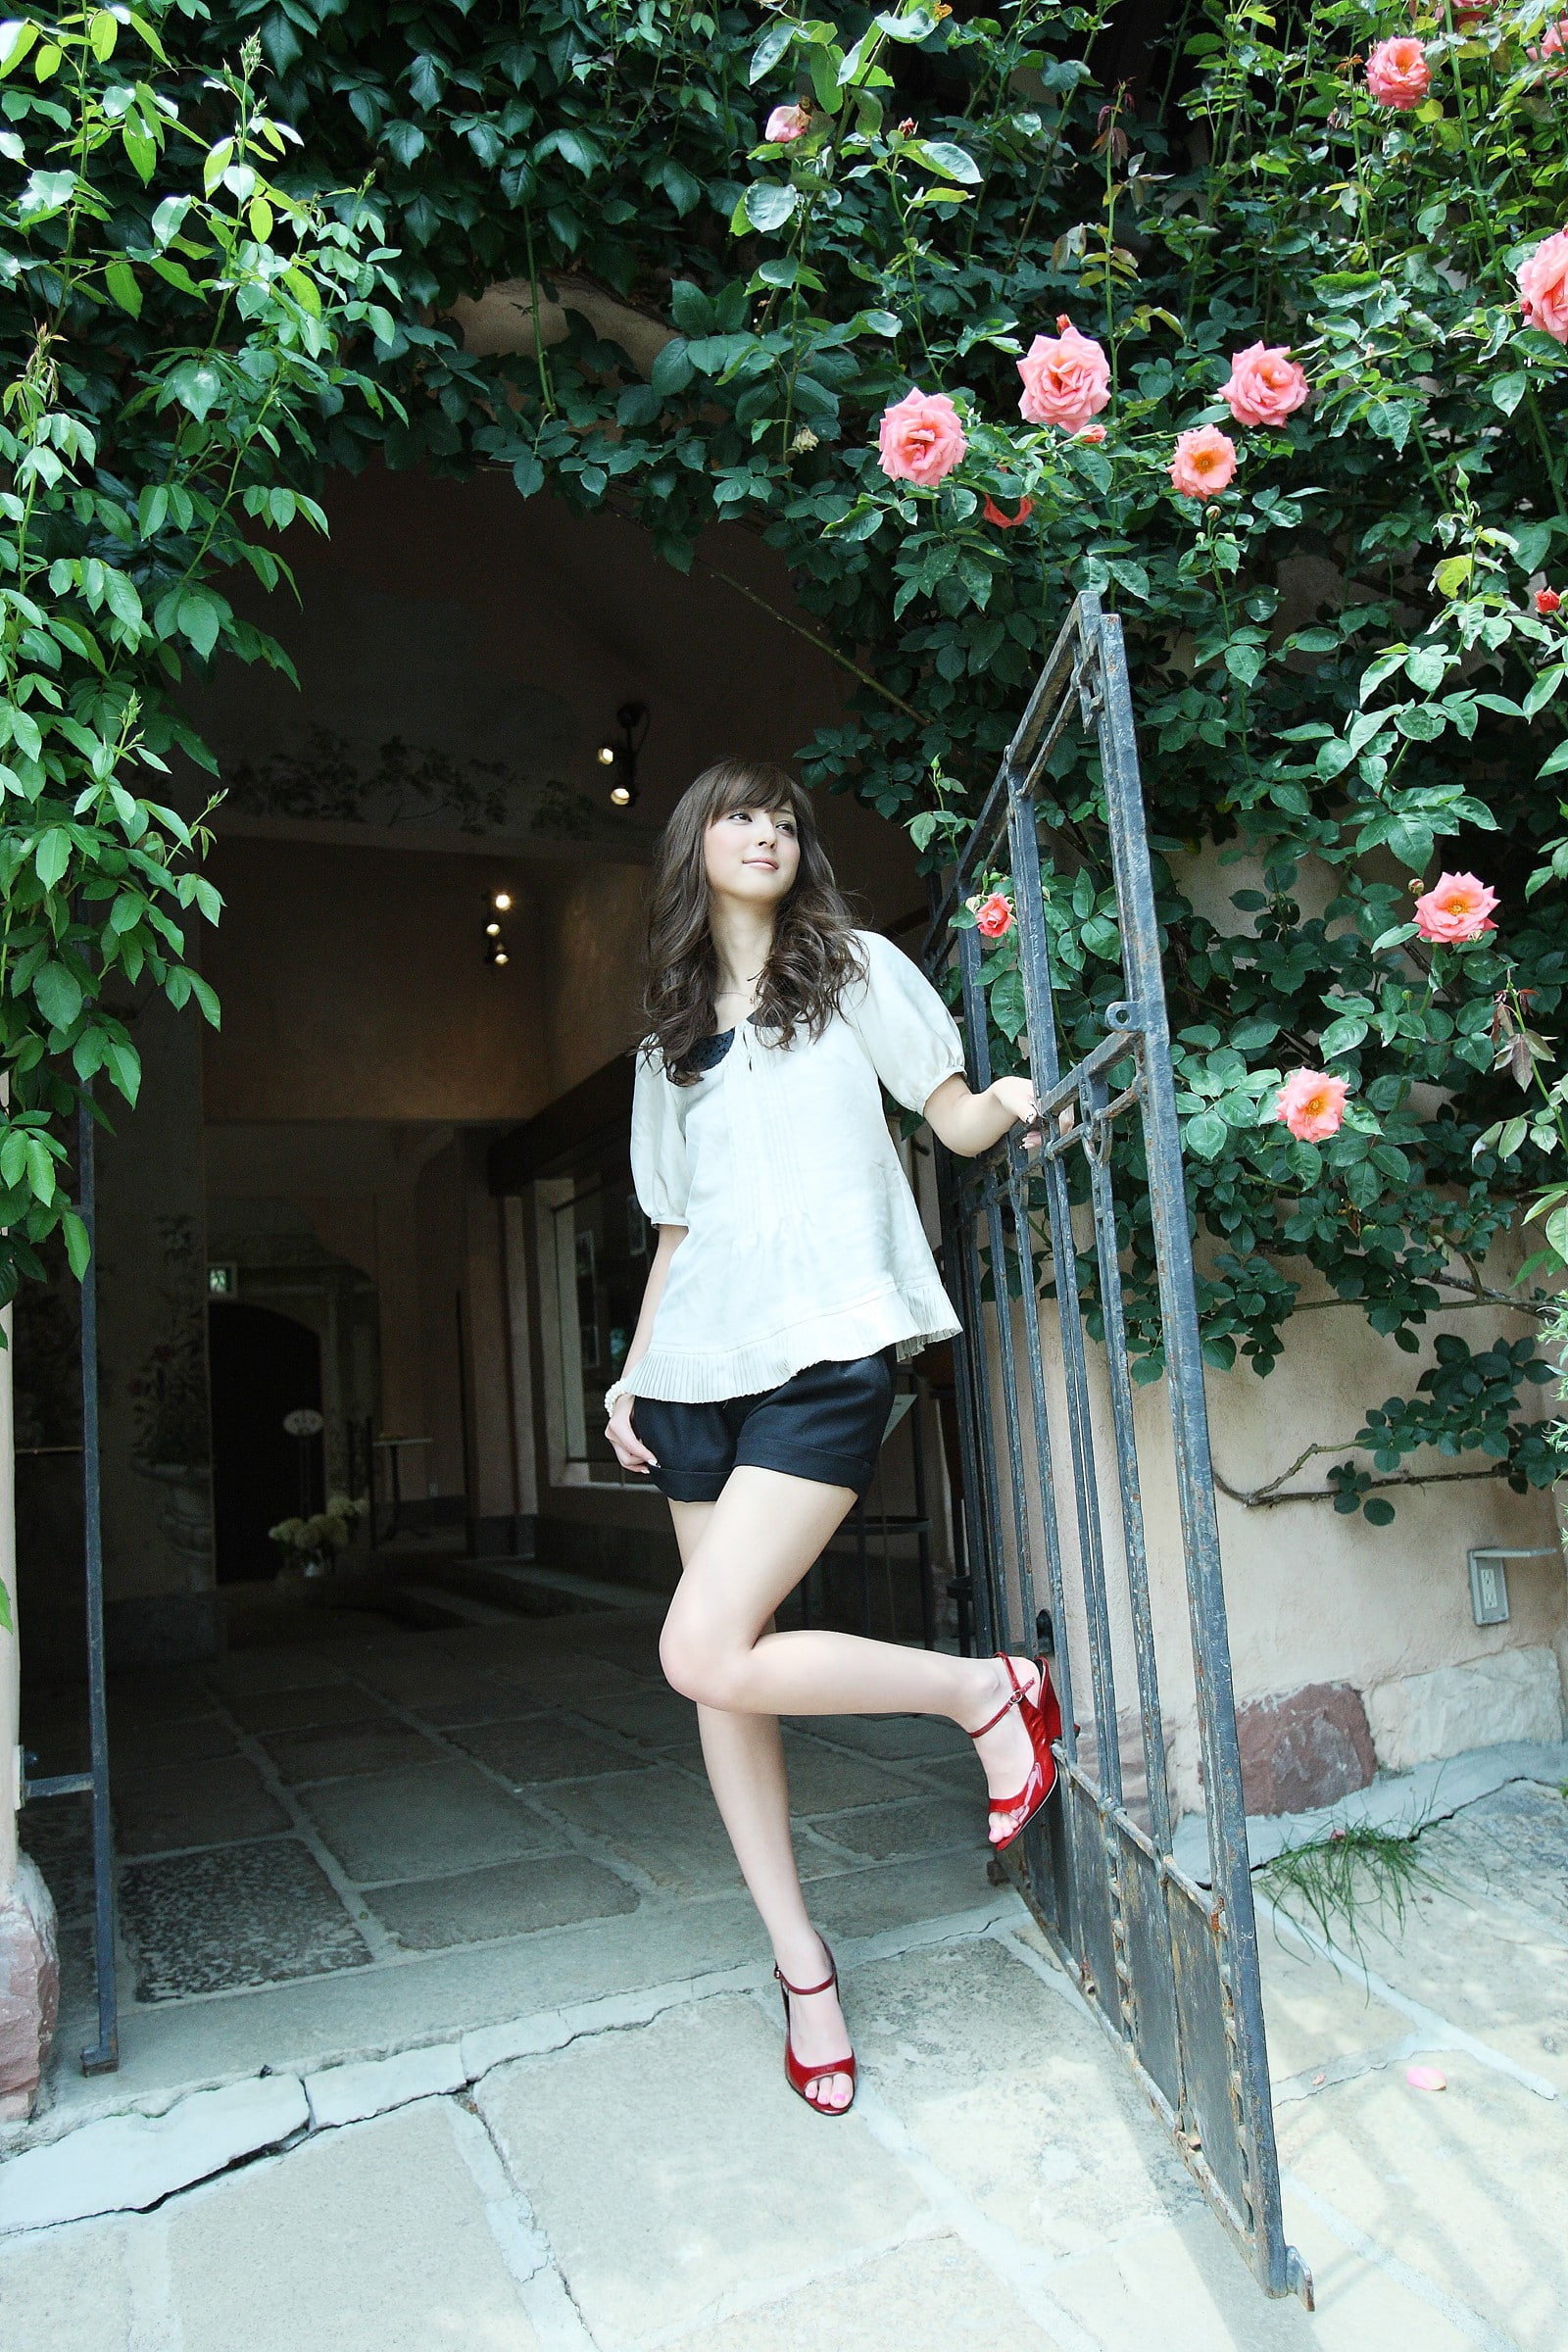 Free Download Hd Wallpaper Sasaki Nozomi Model Asian Japanese Women Women Outdoors